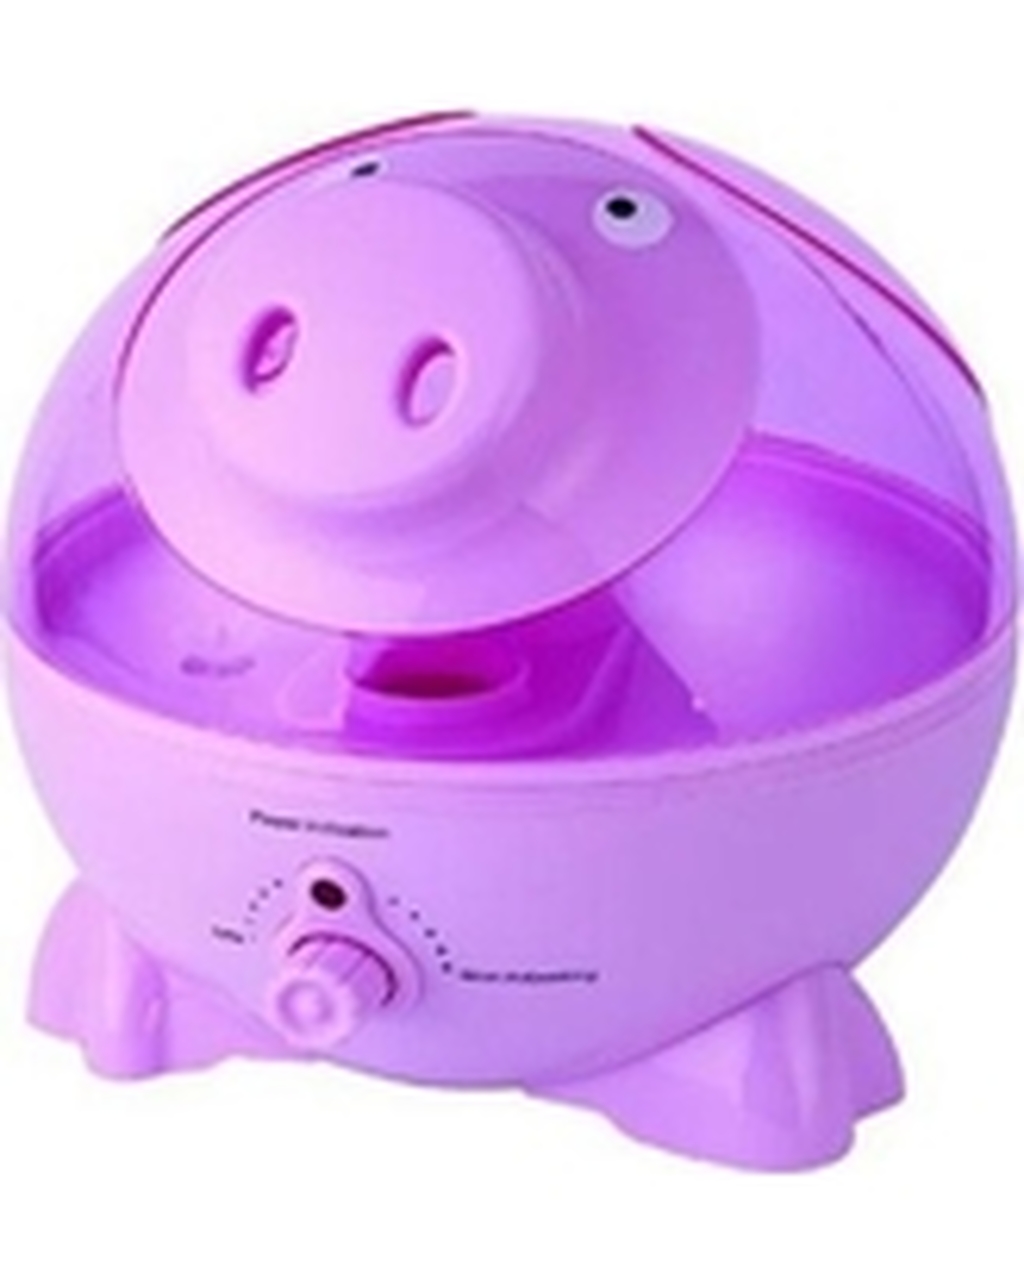 Ultrasonic Pig-Shaped Humidifier